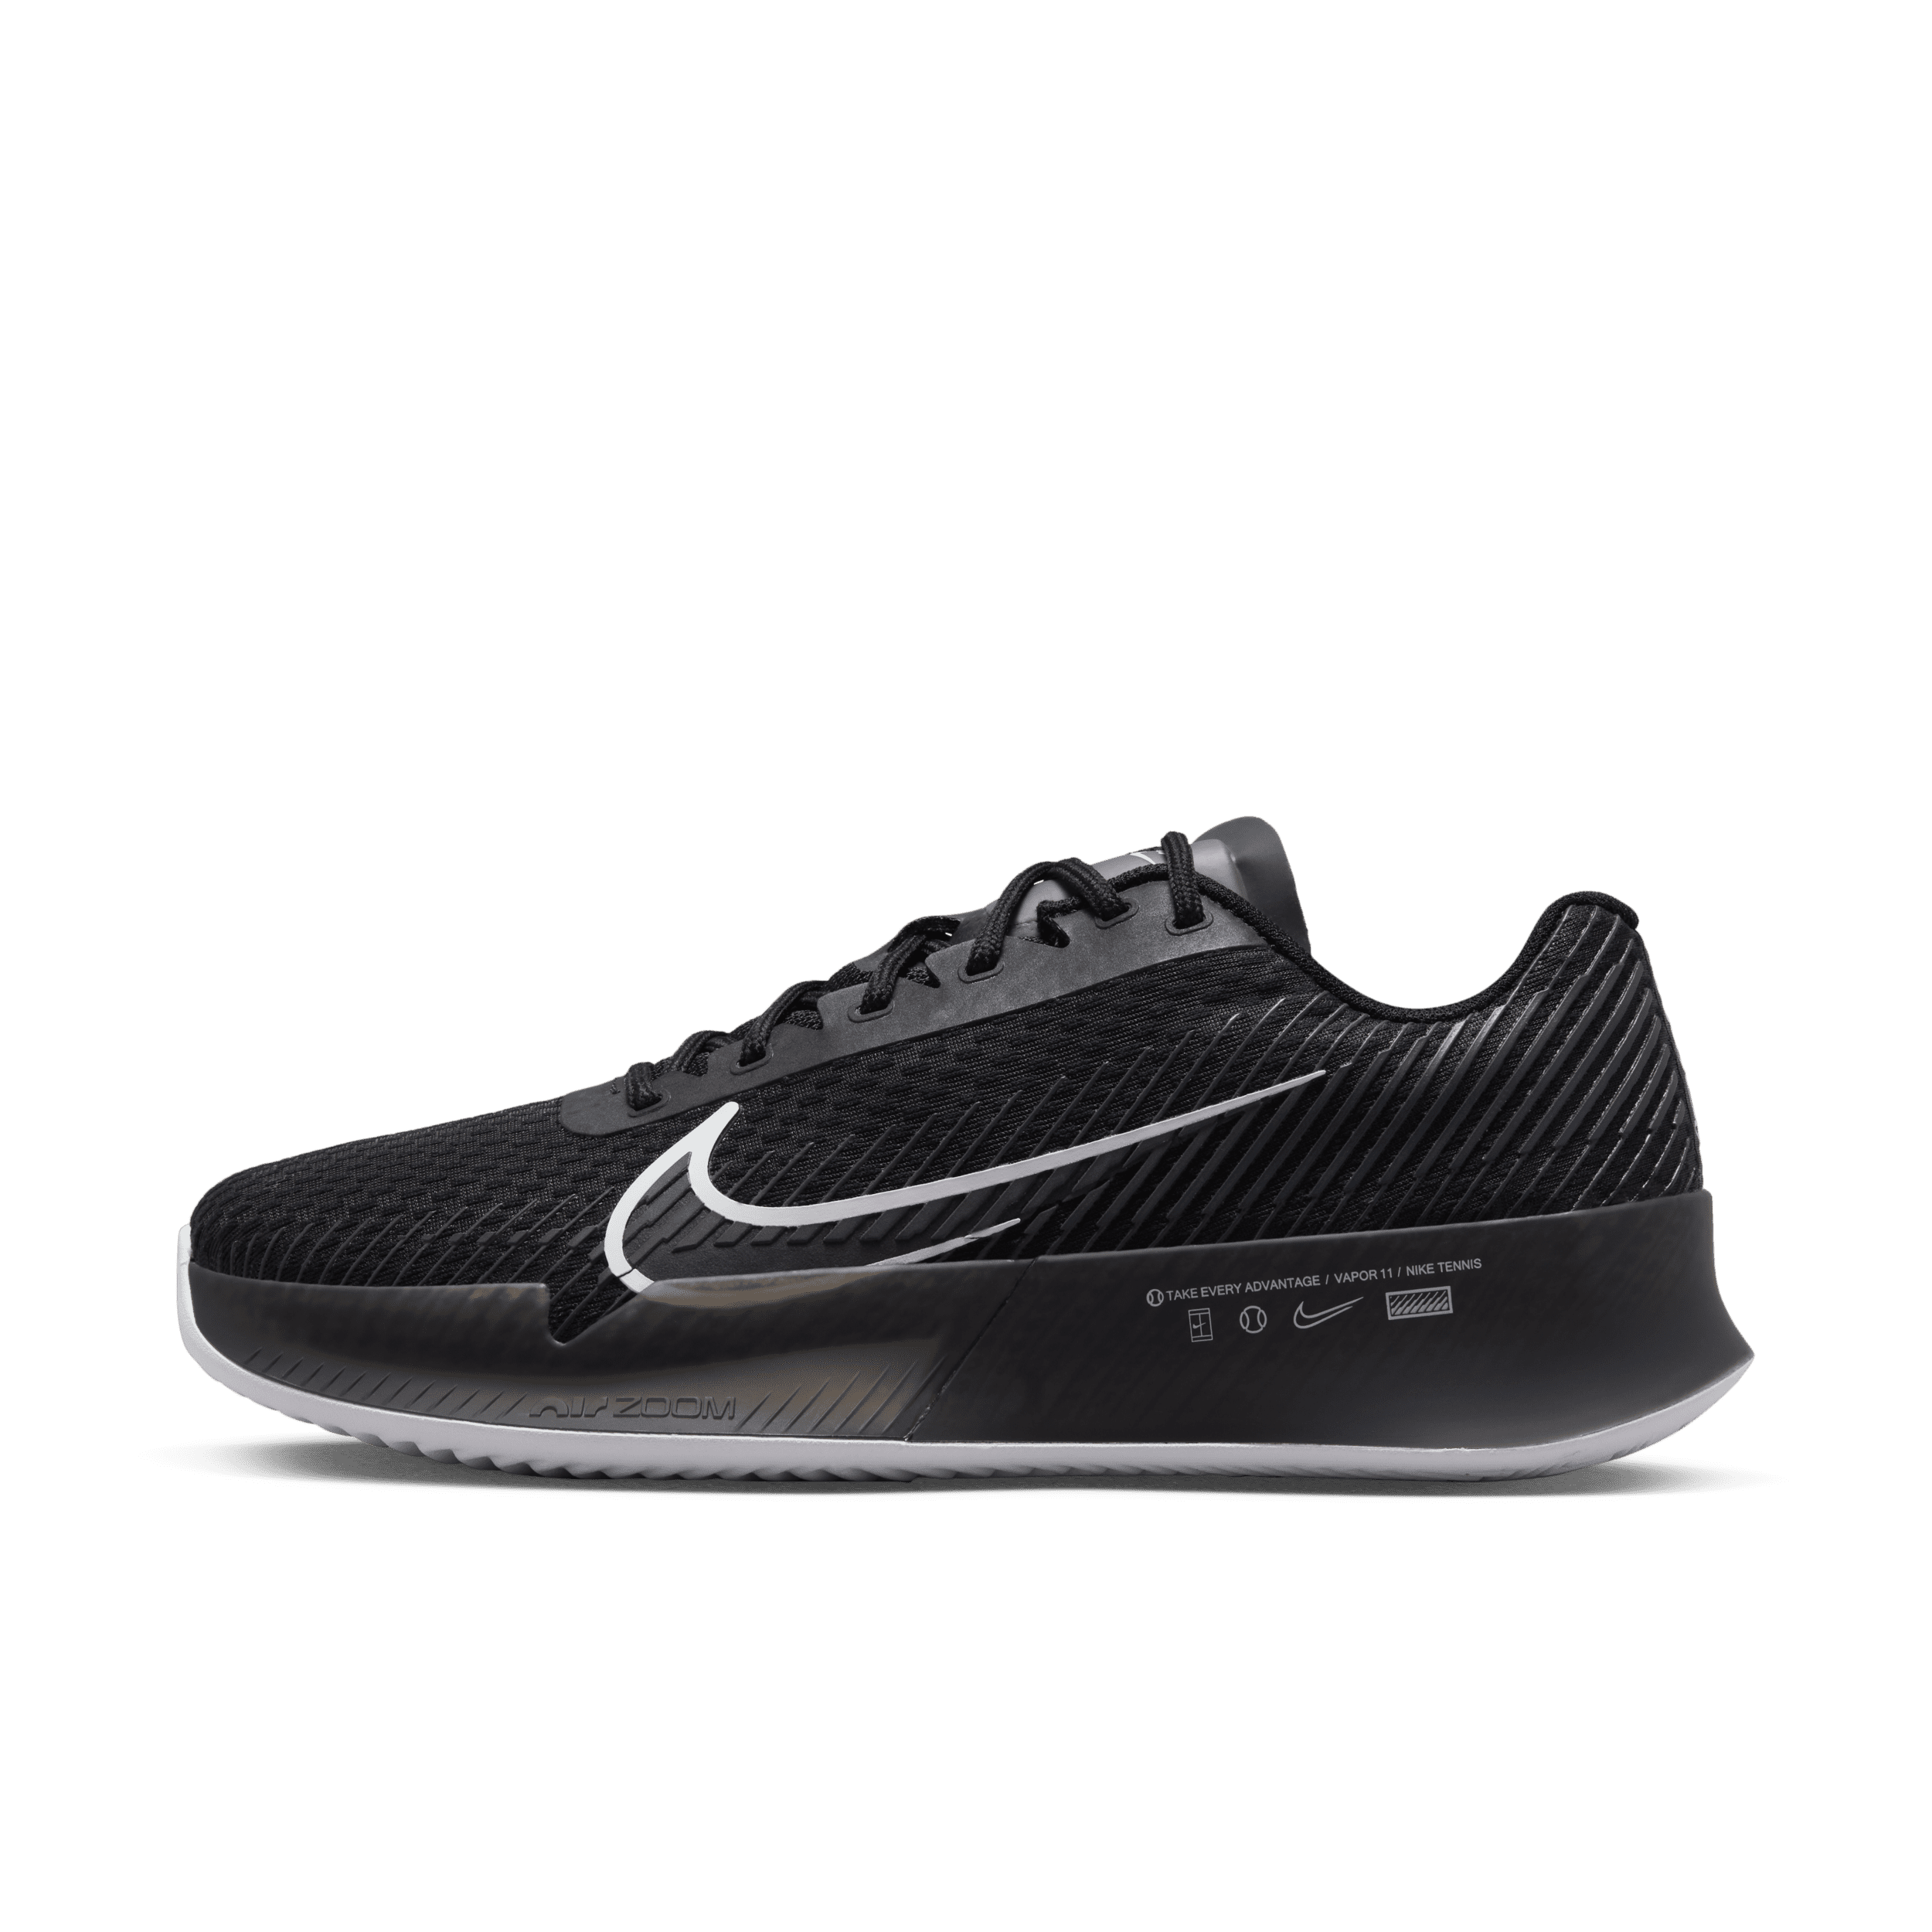 NikeCourt Air Zoom Vapor 11-tennissko til grus til kvinder - sort